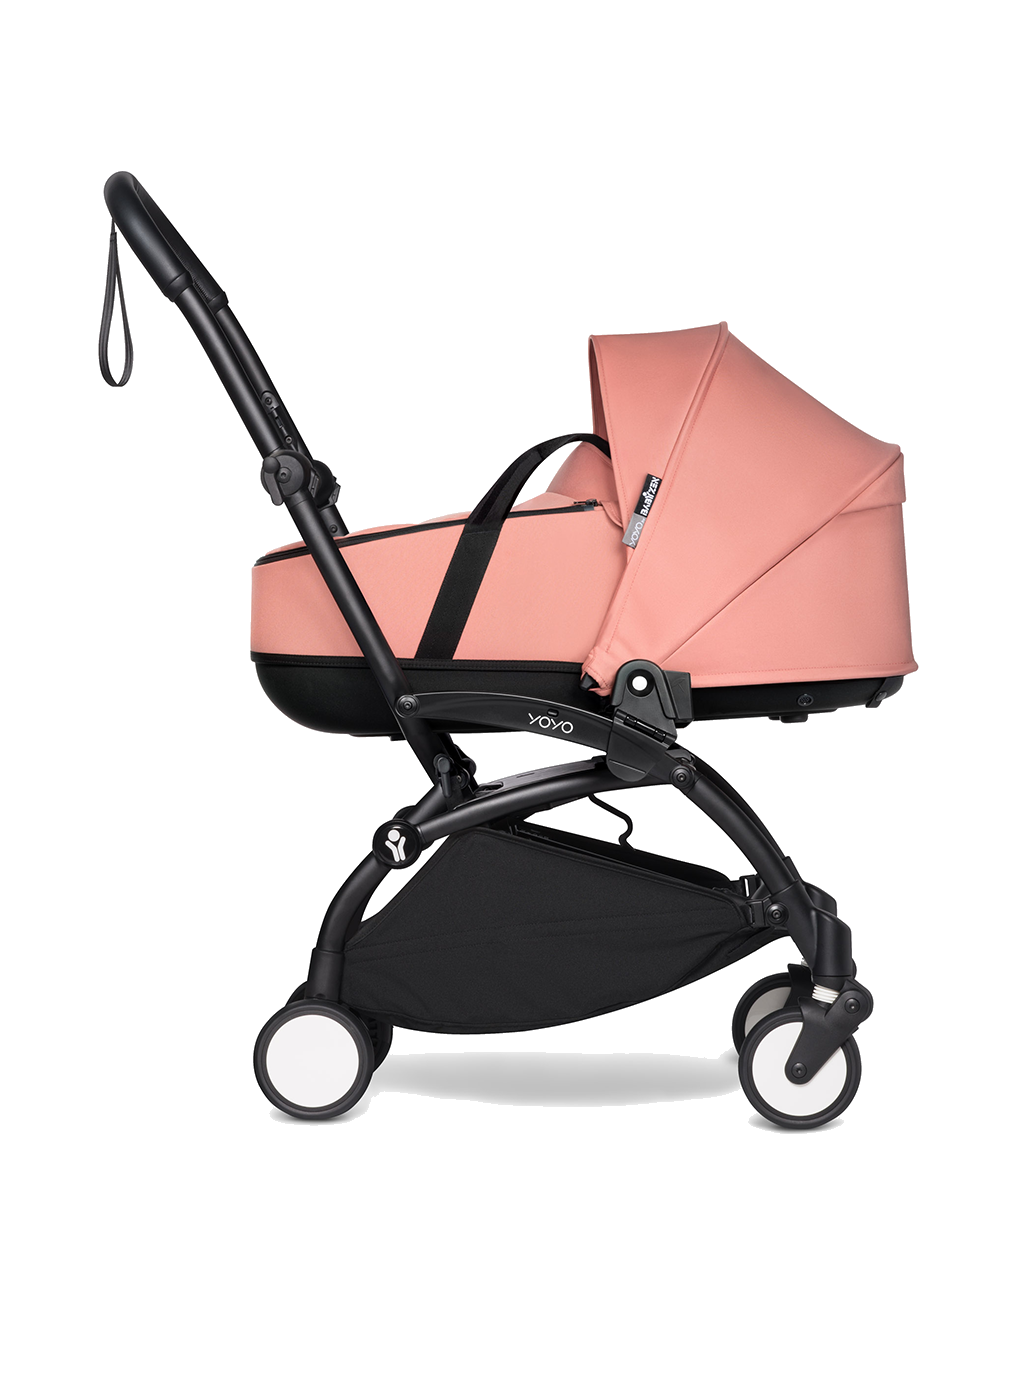 Carrycot for the BABYZEN YOYO stroller 0m+